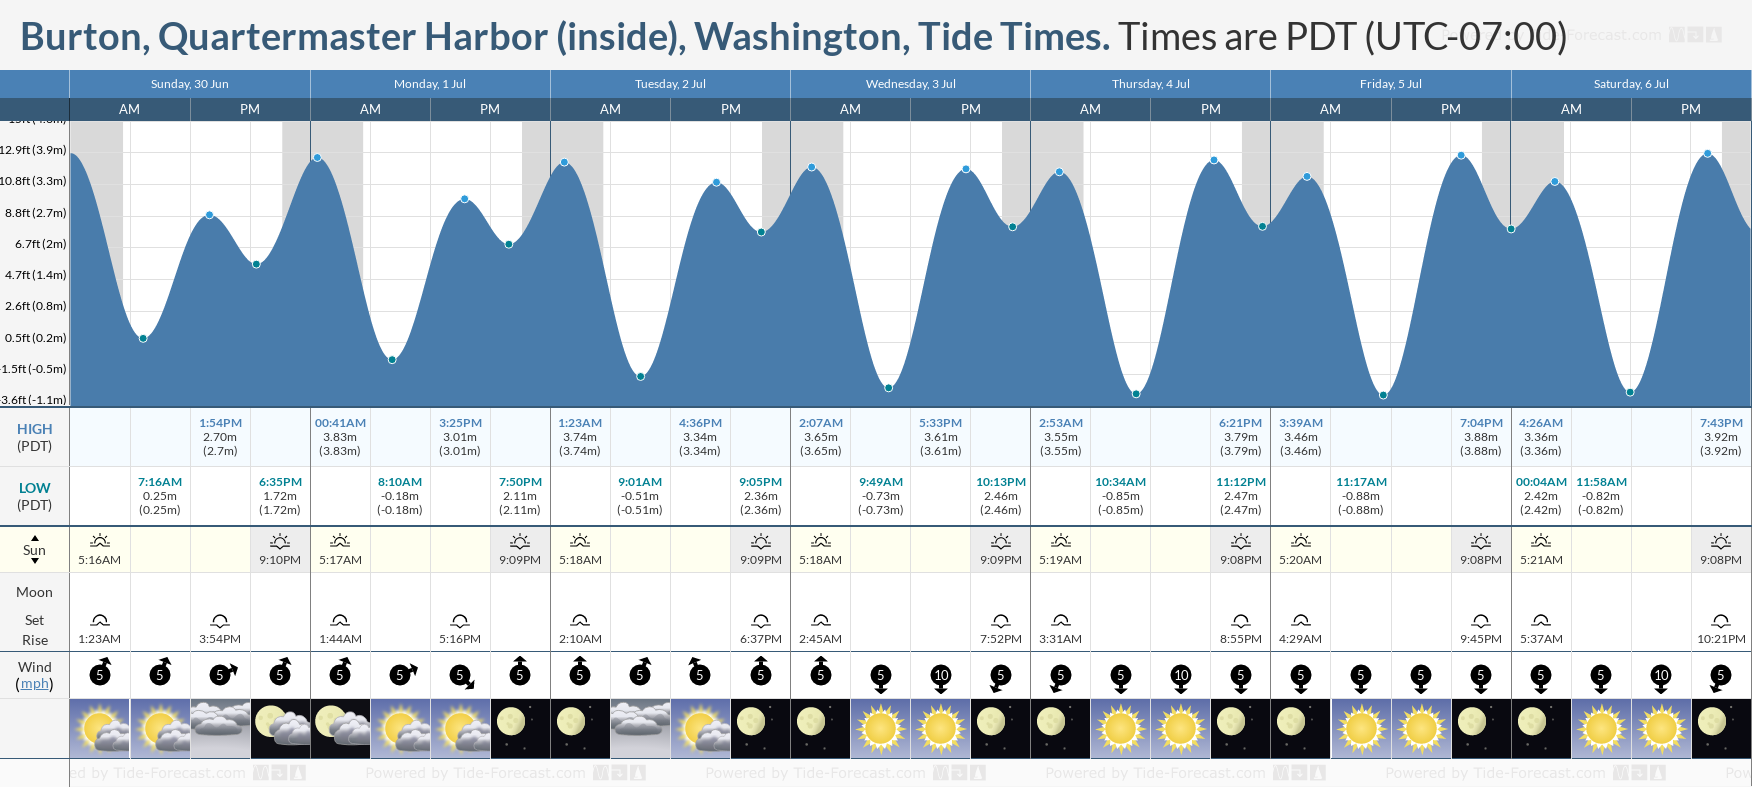 Tide Times and Tide Chart for Burton, Quartermaster Harbor (inside)